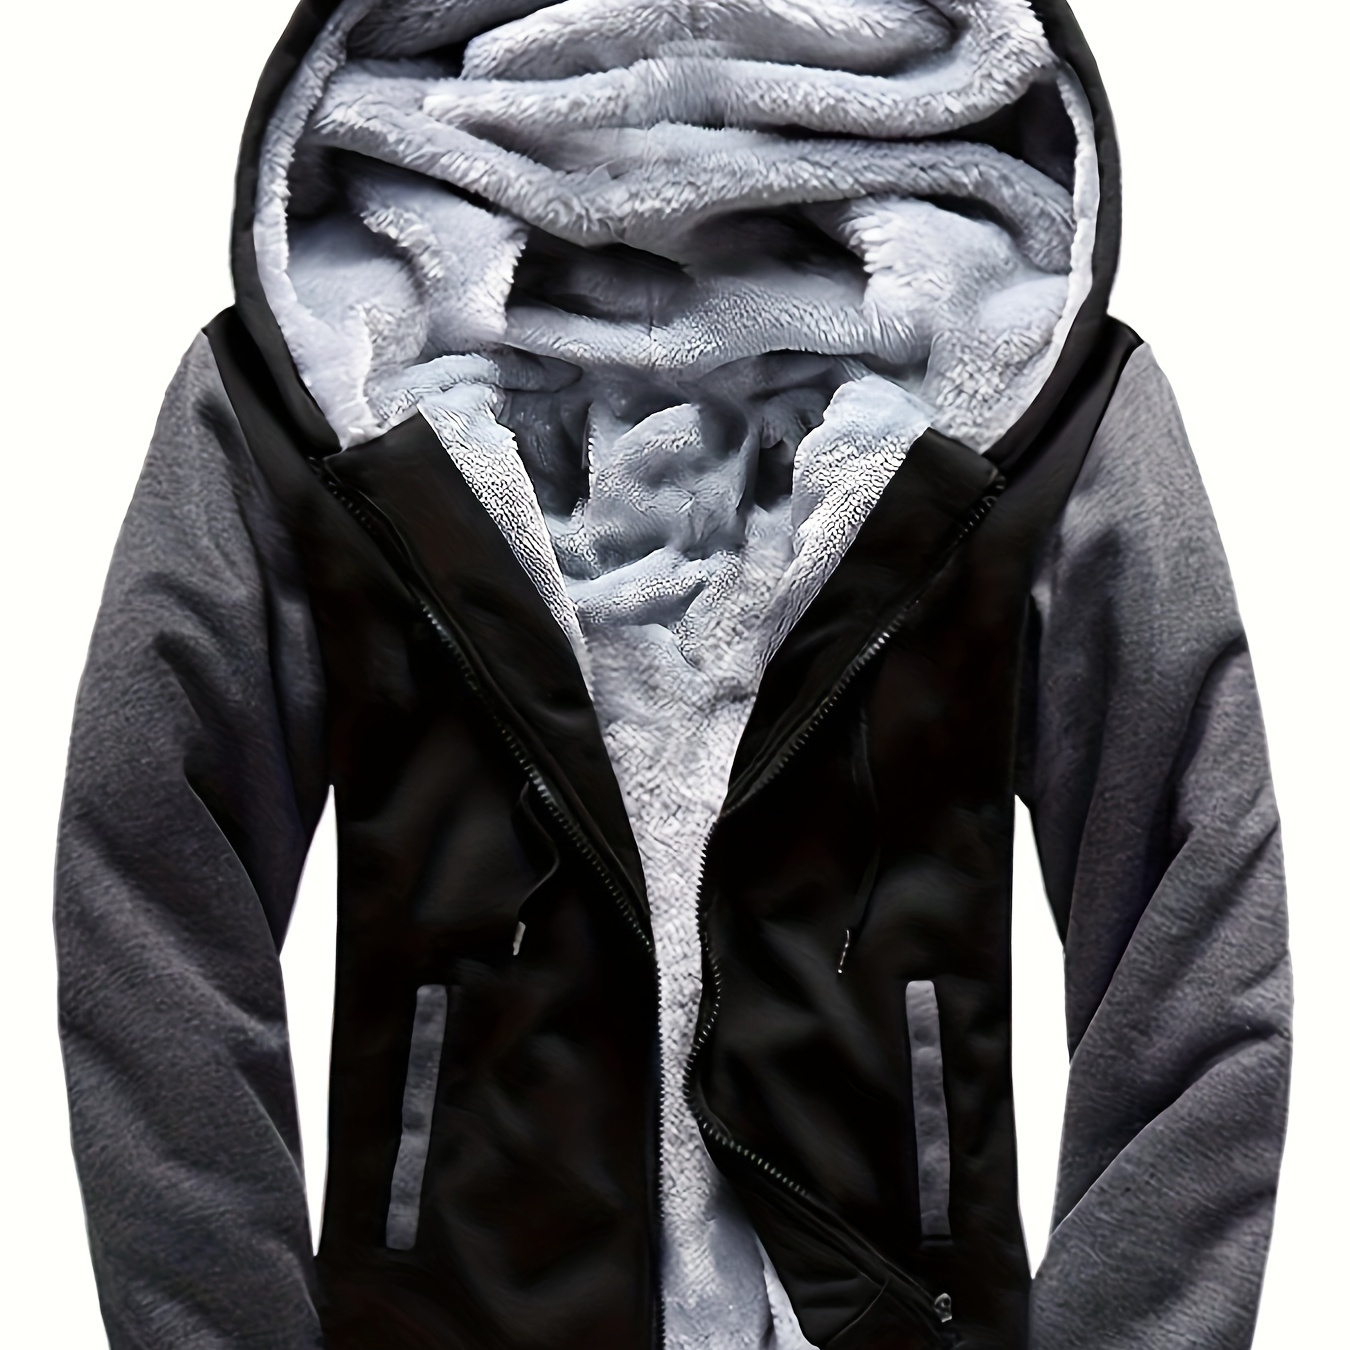 

Men's Warm Fleece Hooded Jacket, Casual Color Block Jacket Coat For Fall Winter